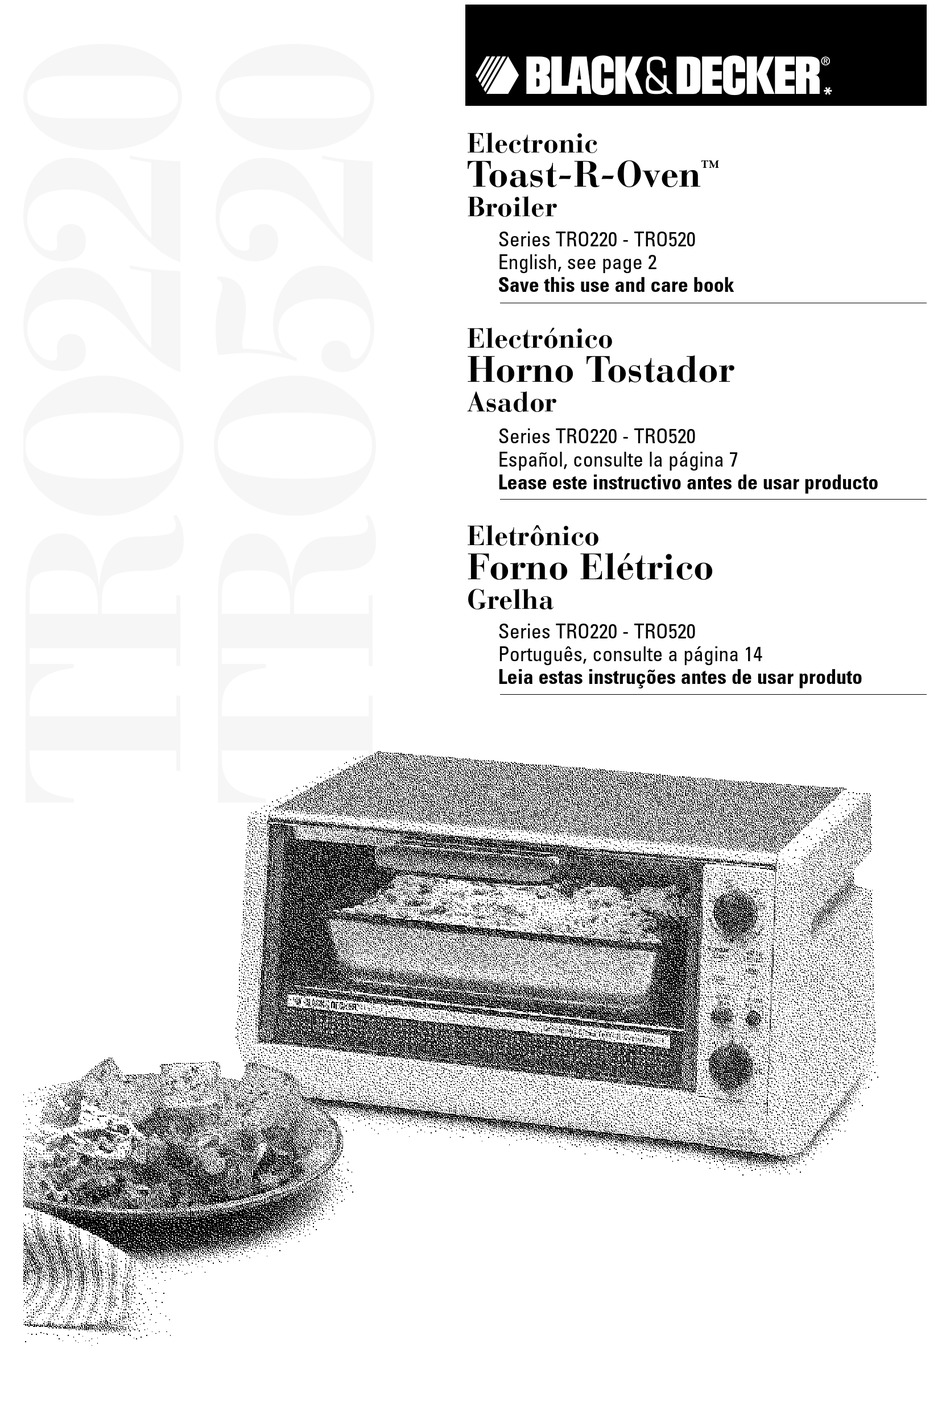 https://data2.manualslib.com/first-image/i1/2/170/16975/black-decker-toast-r-oven-tro220-series.jpg